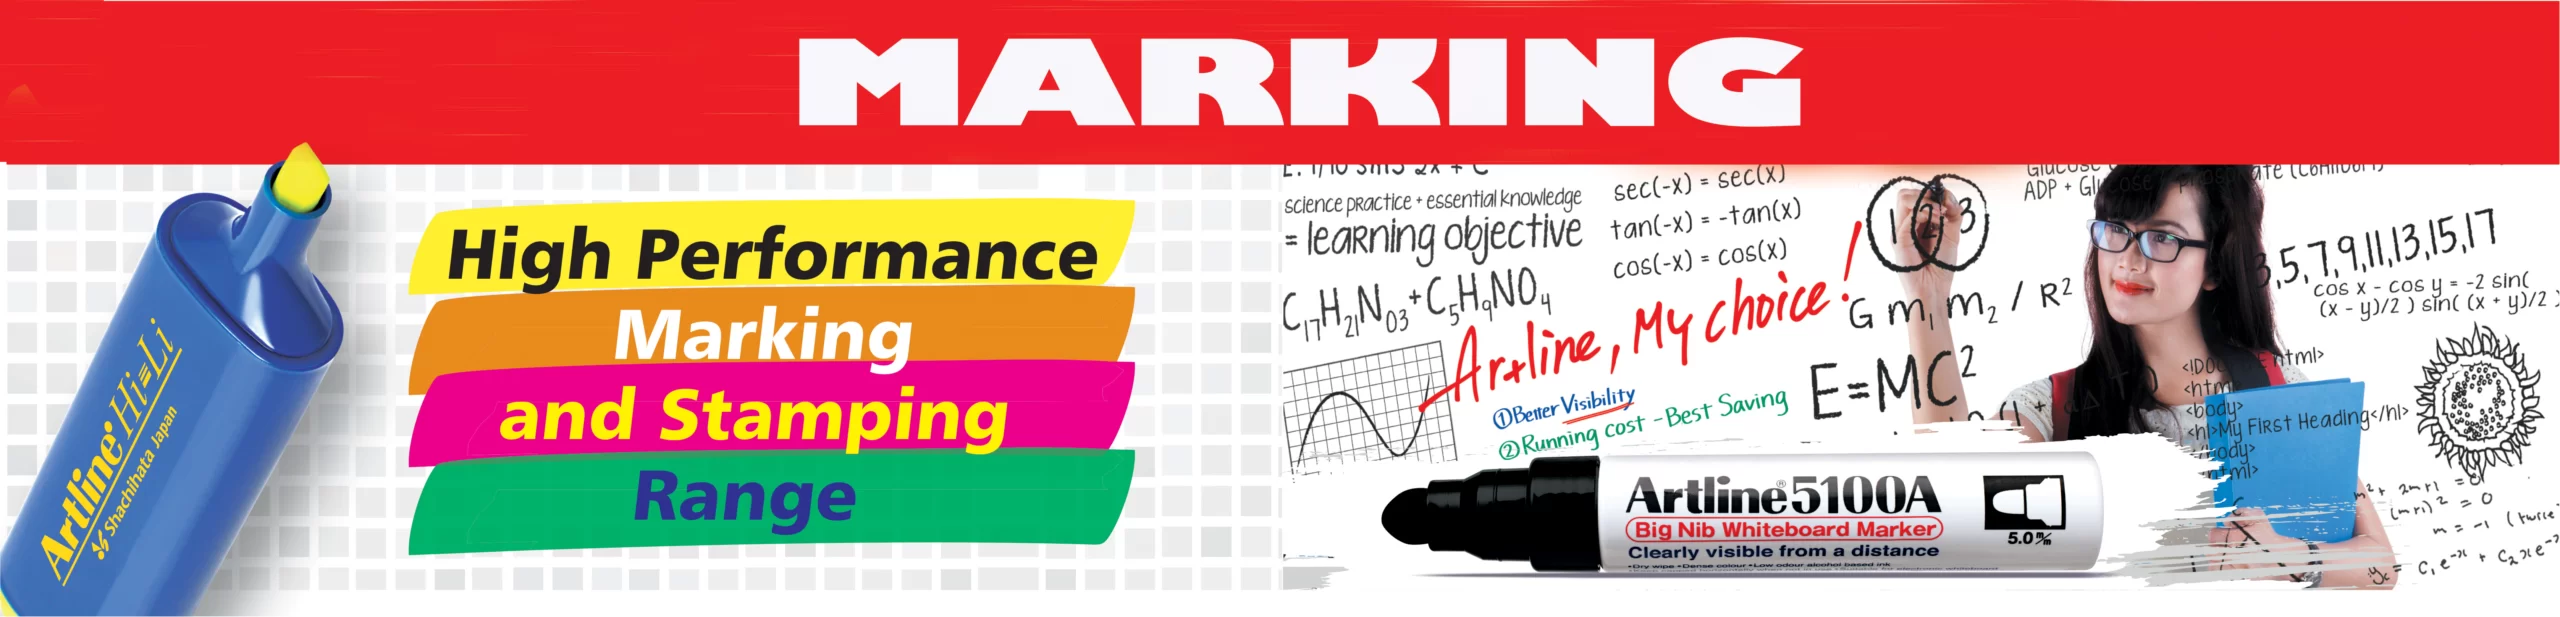 artline marking product